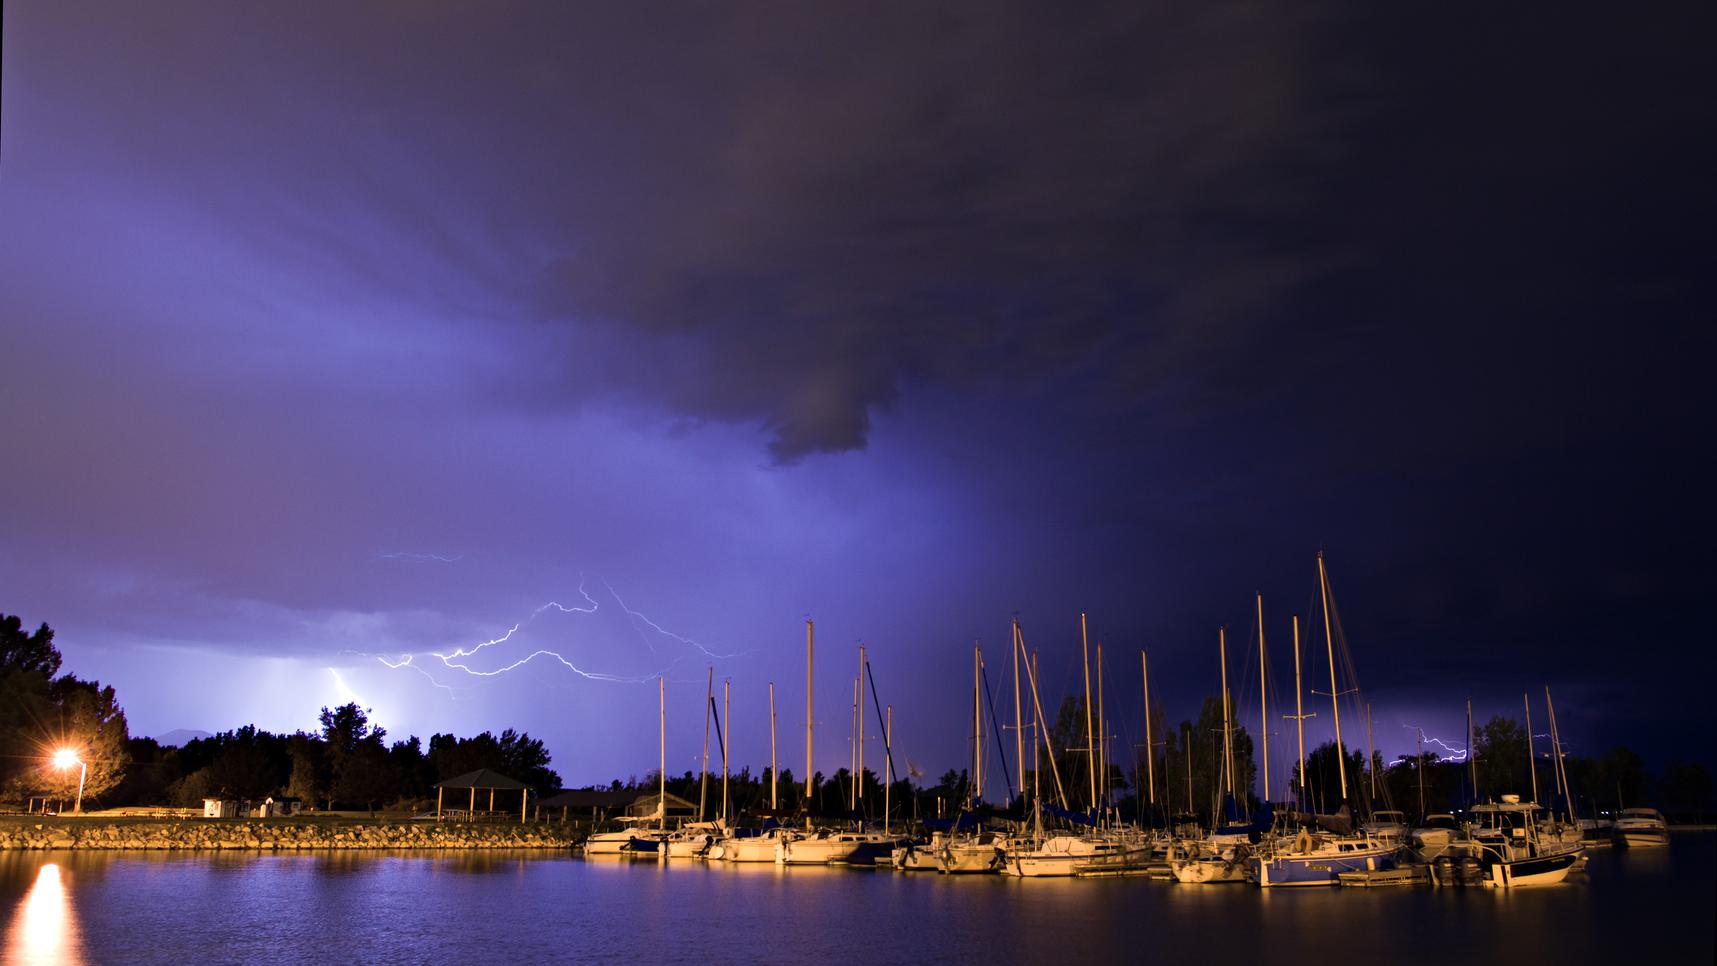 Lightning strikes behind boats in a marina